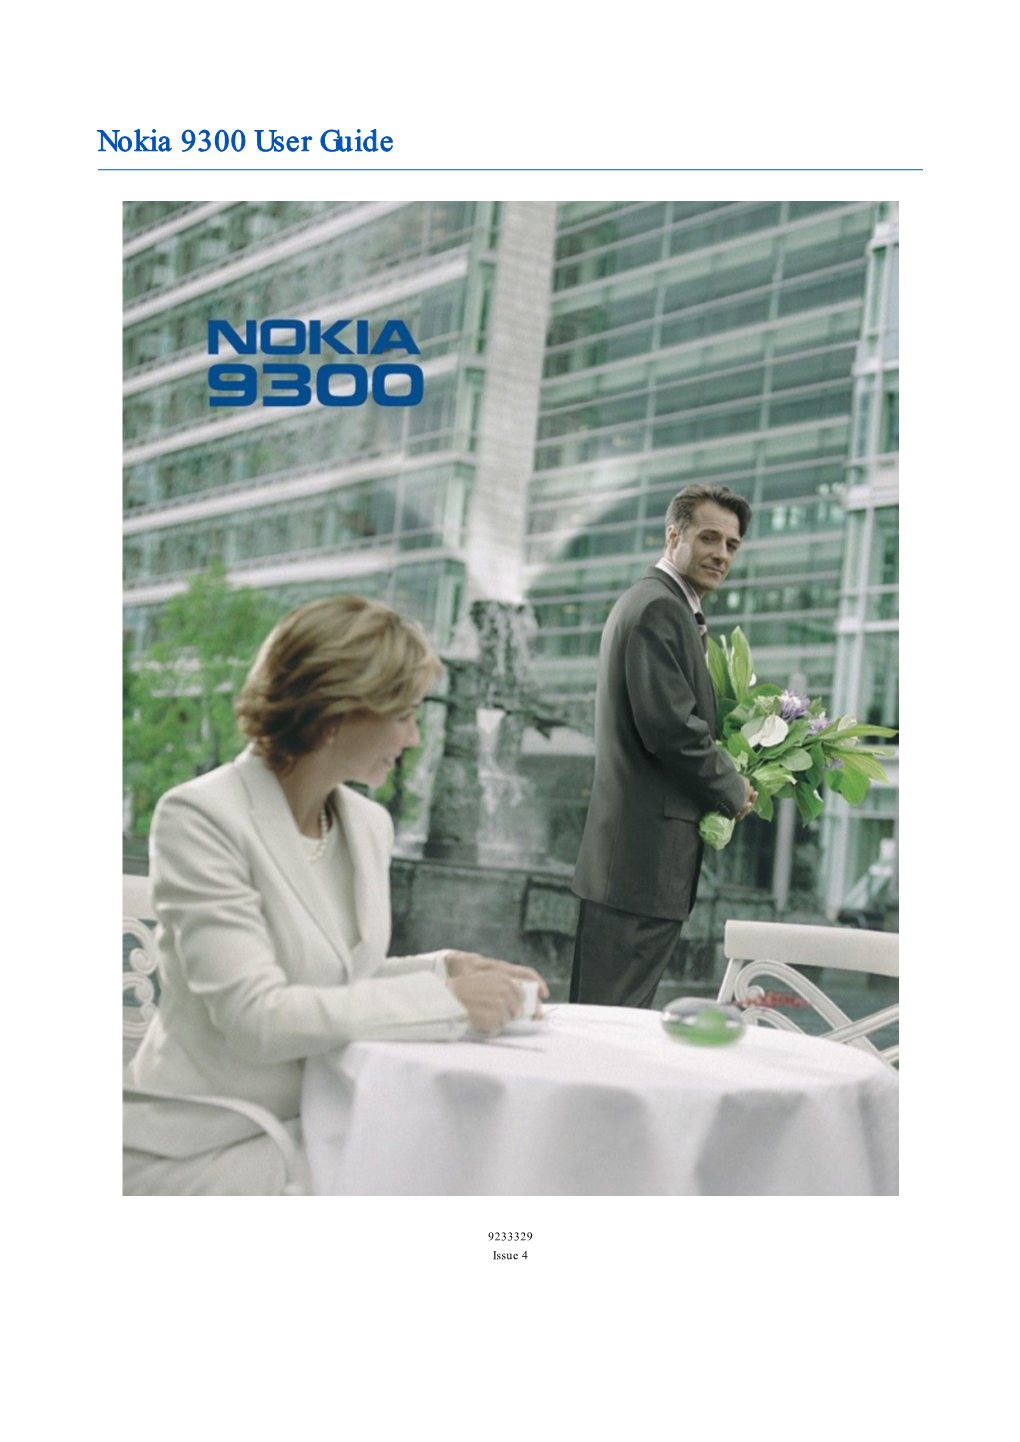 Nokia 9300 User Guide